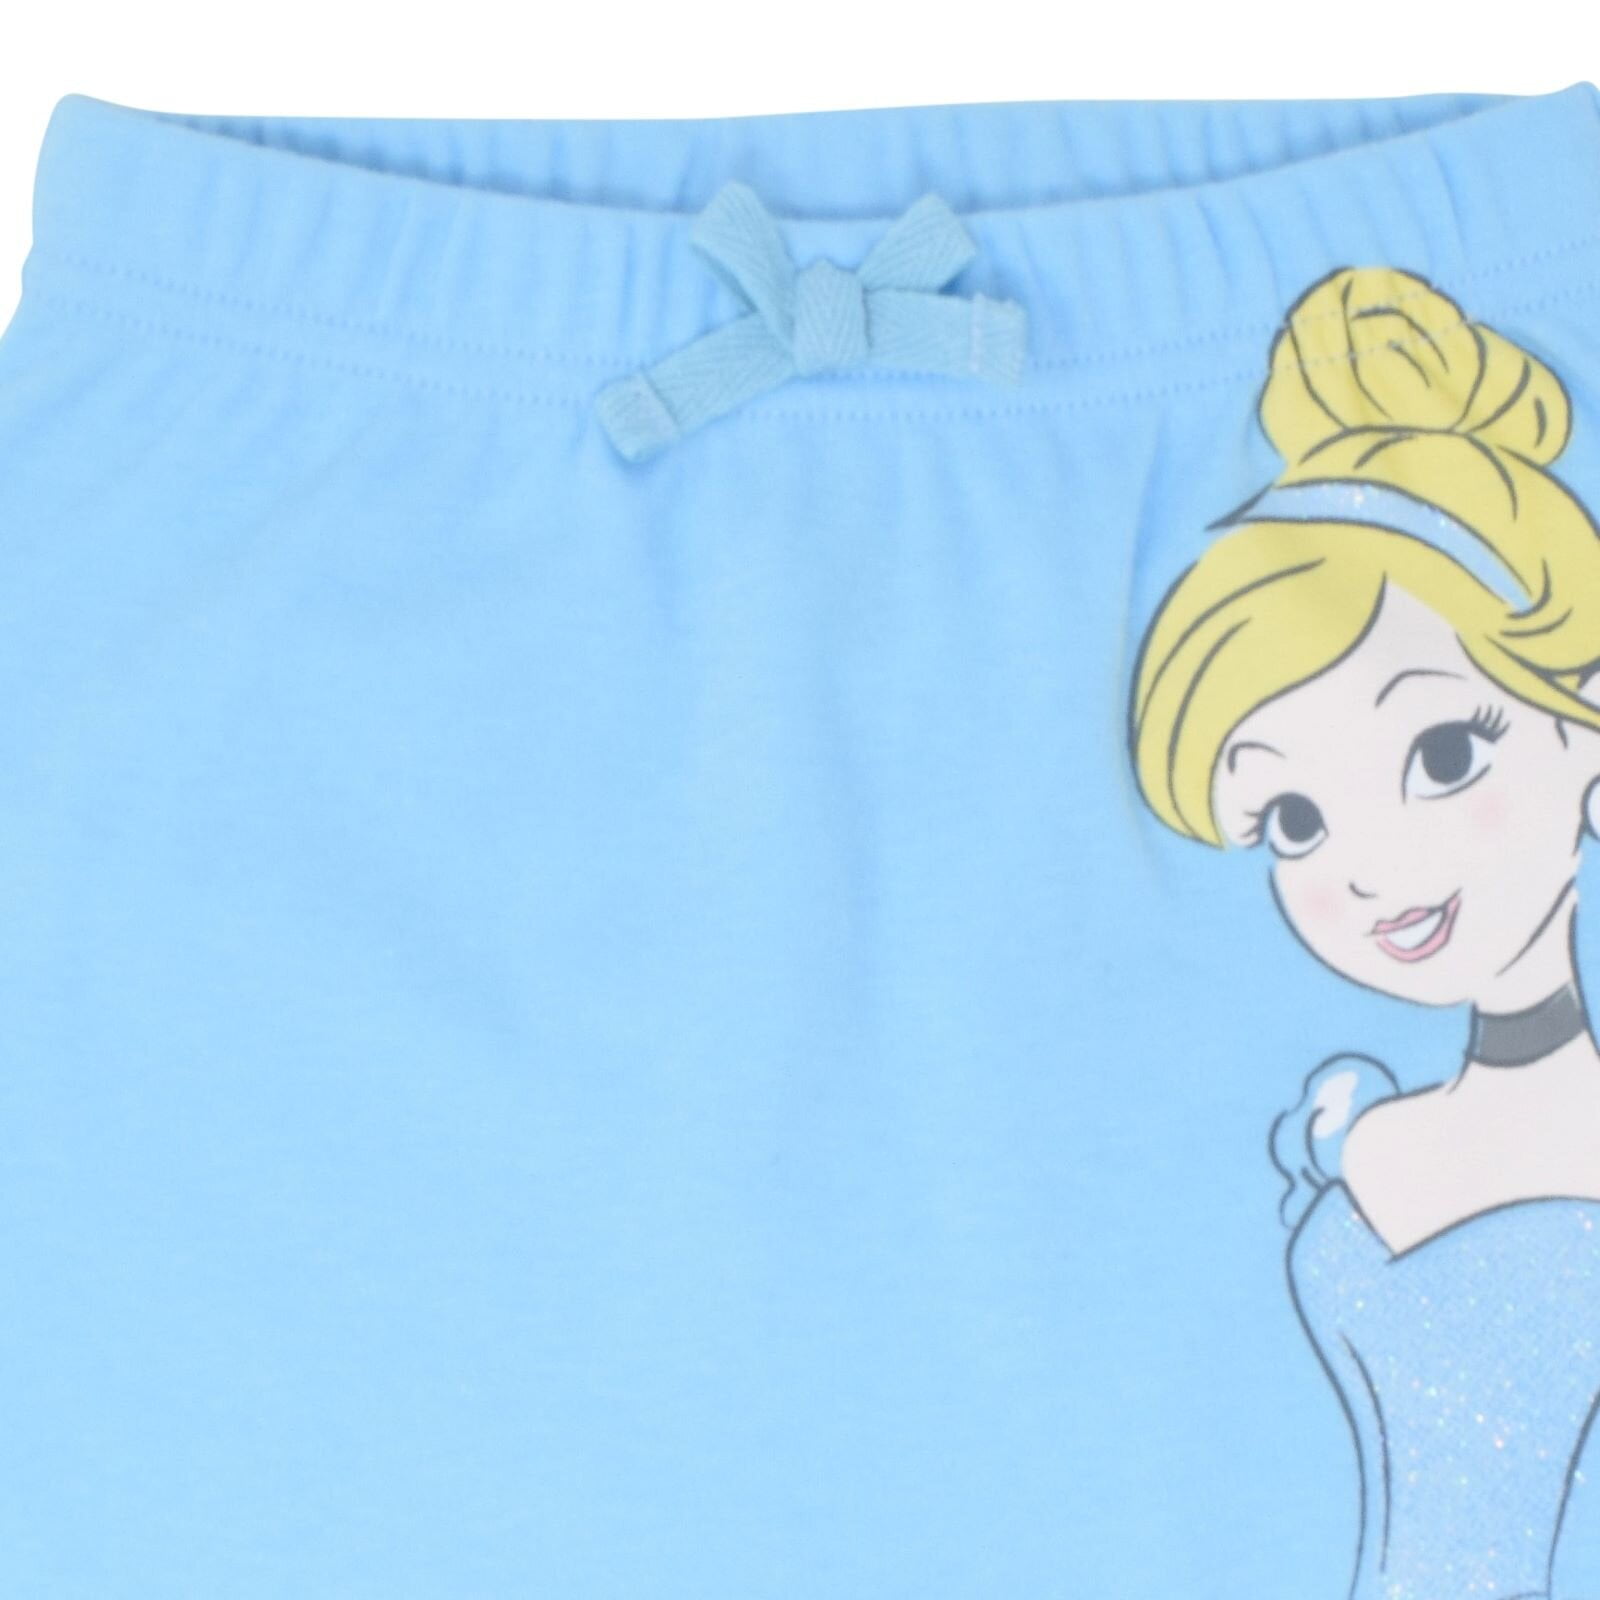 Disney Princess Belle Aurora Cinderella Infant Baby Girls 3 Pack